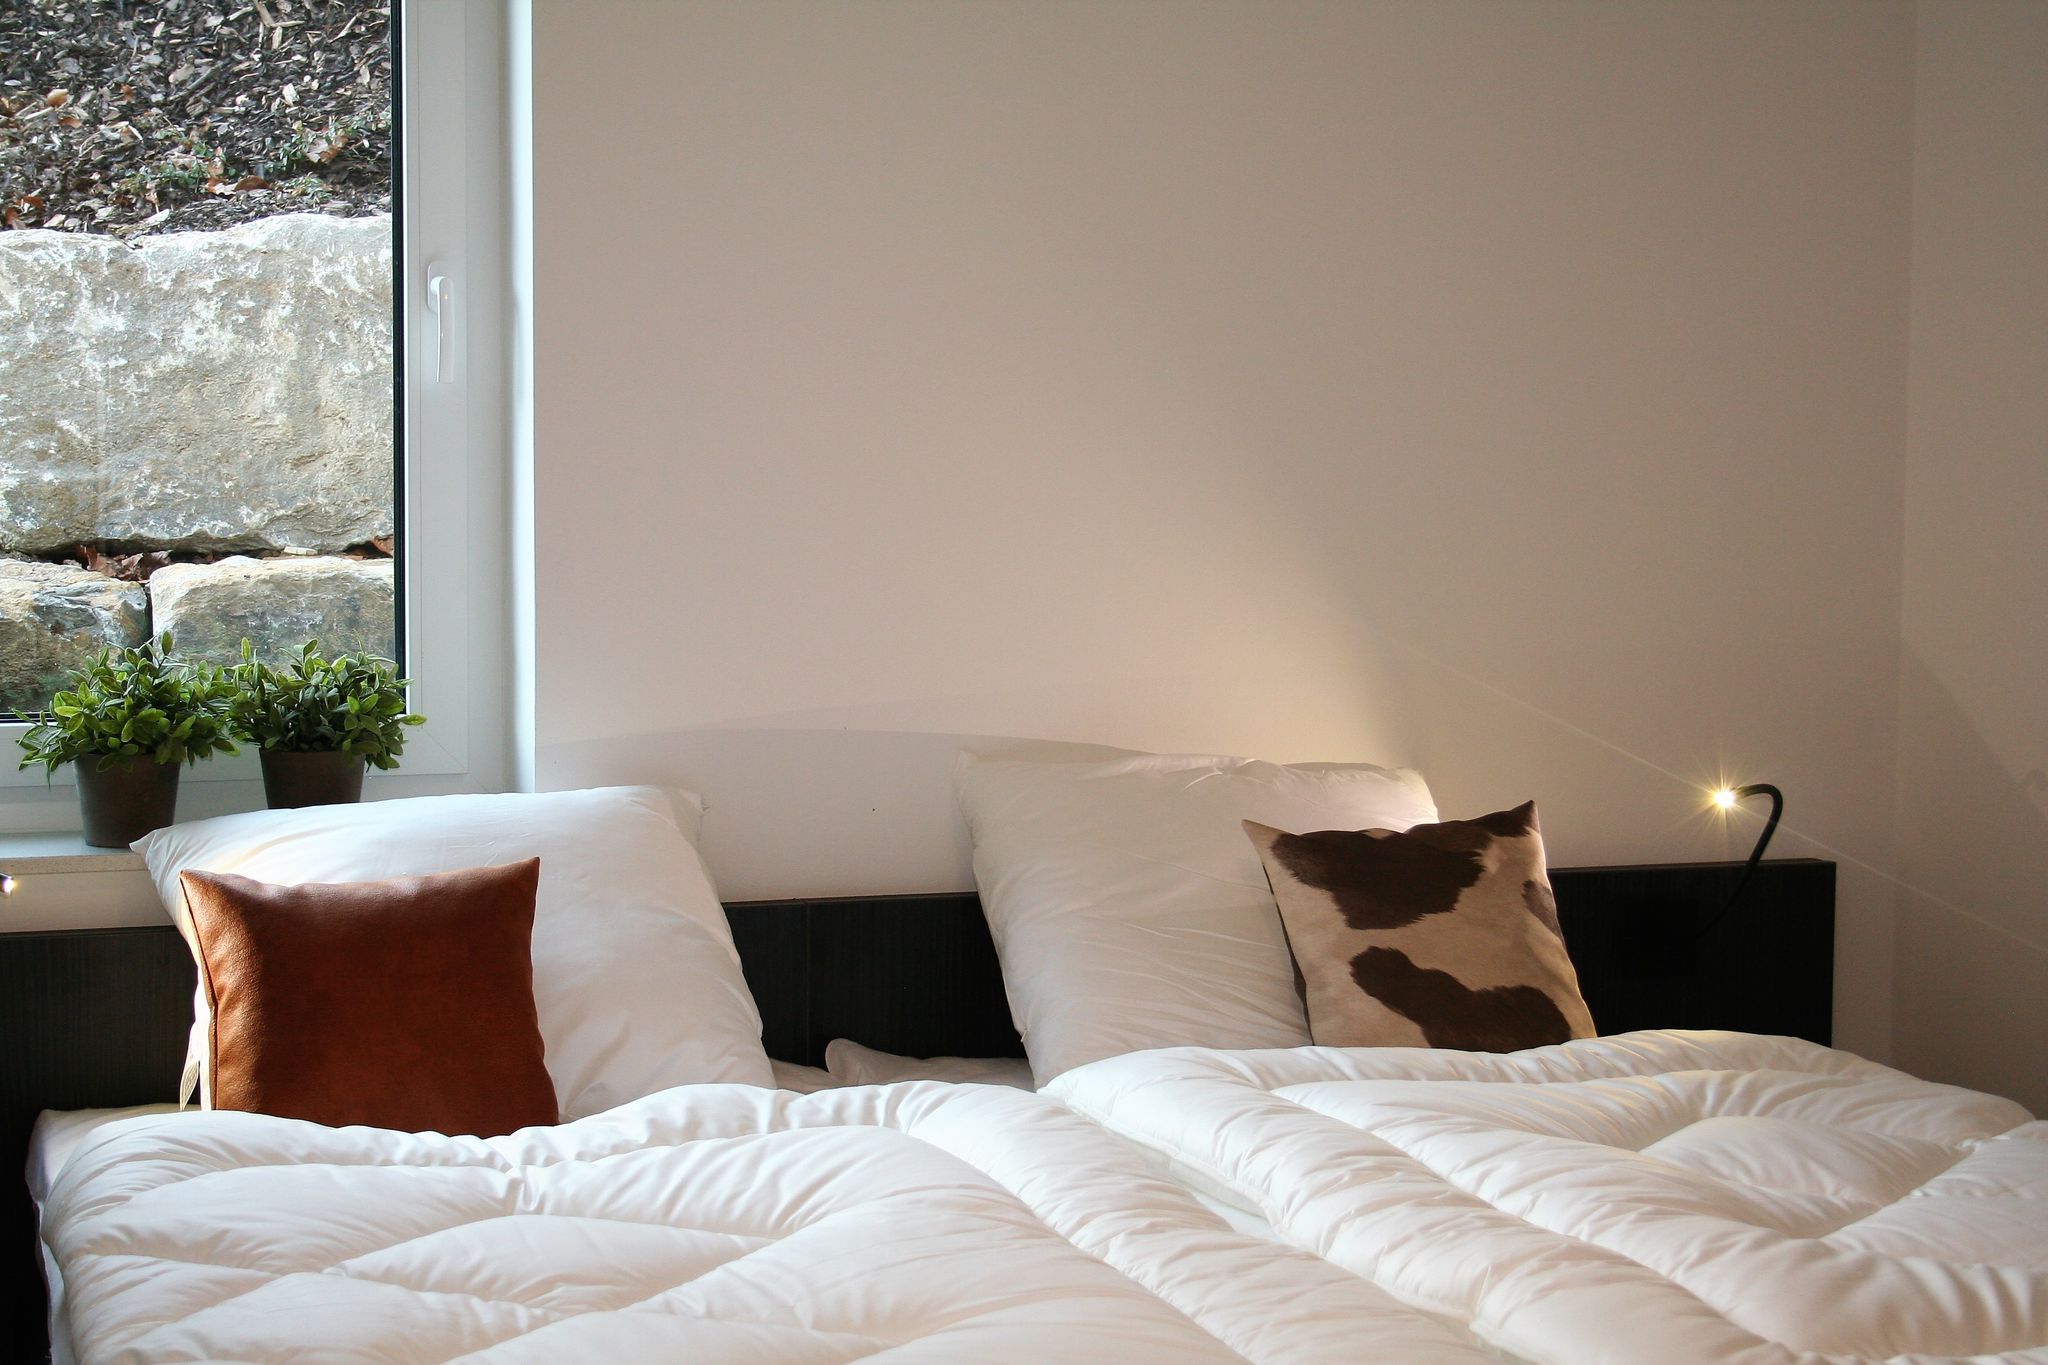 Modern, cozy apartment on the edge of Winterberg